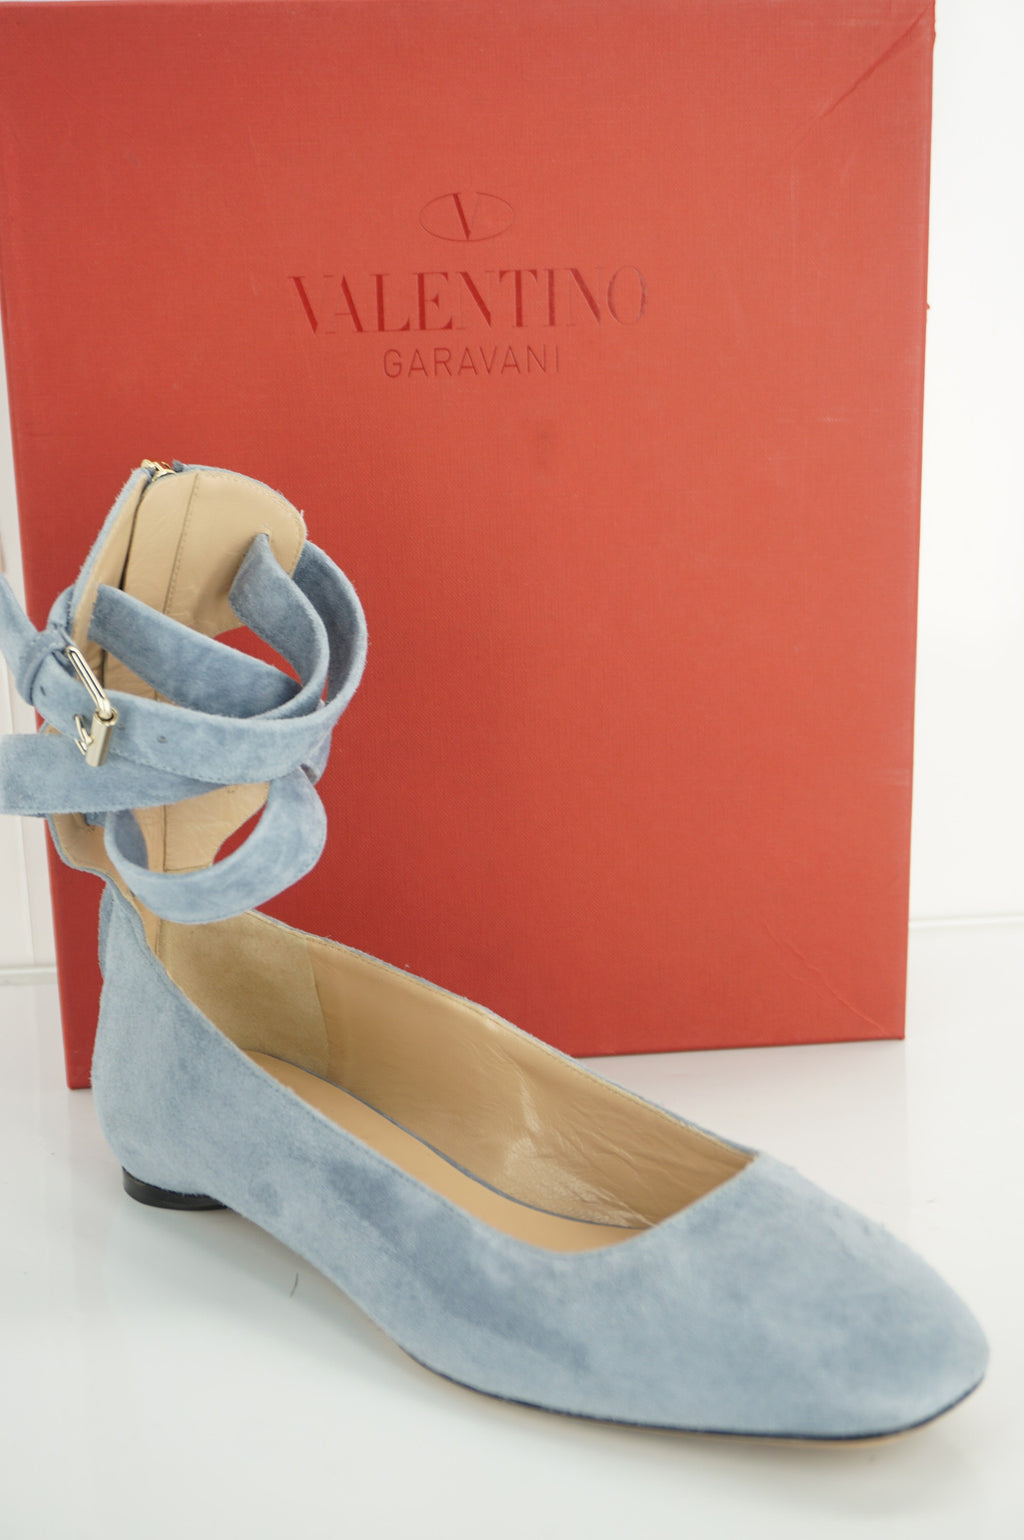 Valentino Plum Ankle Wrap Ballerina Flats SZ 38 Sky Blue Suede $945 NIB